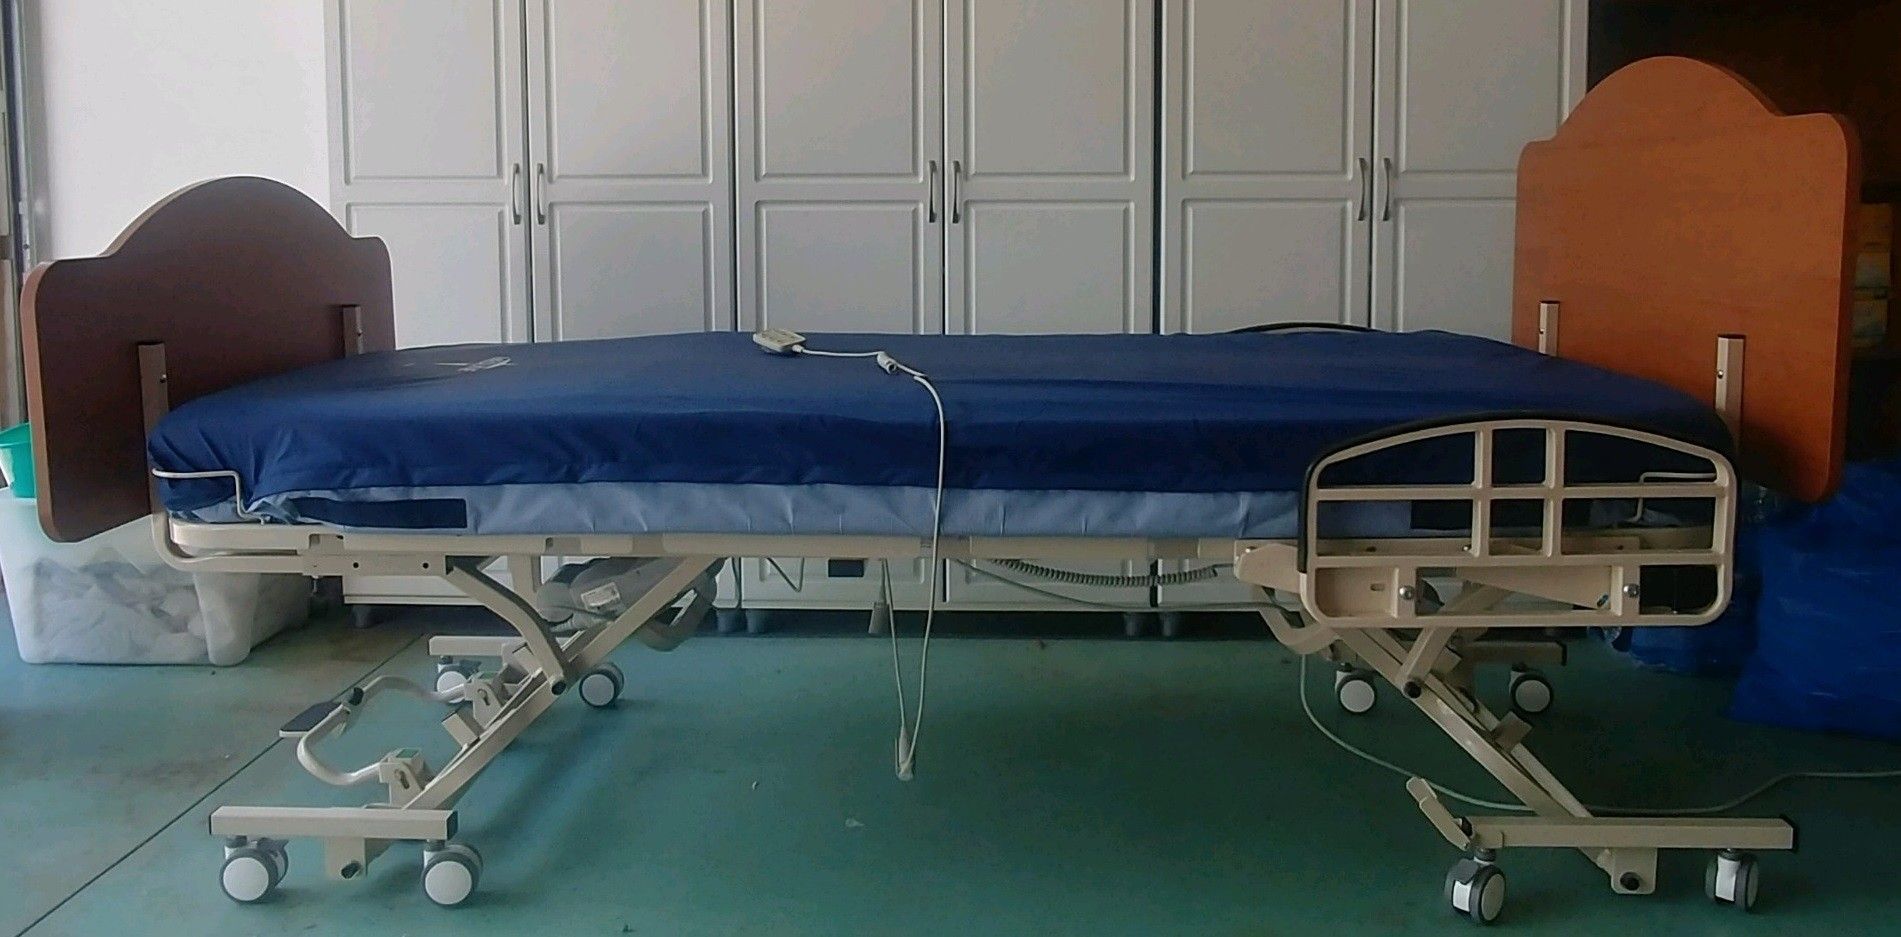 Medline Alterra 1385 Hospital Bed - Excellent Condition